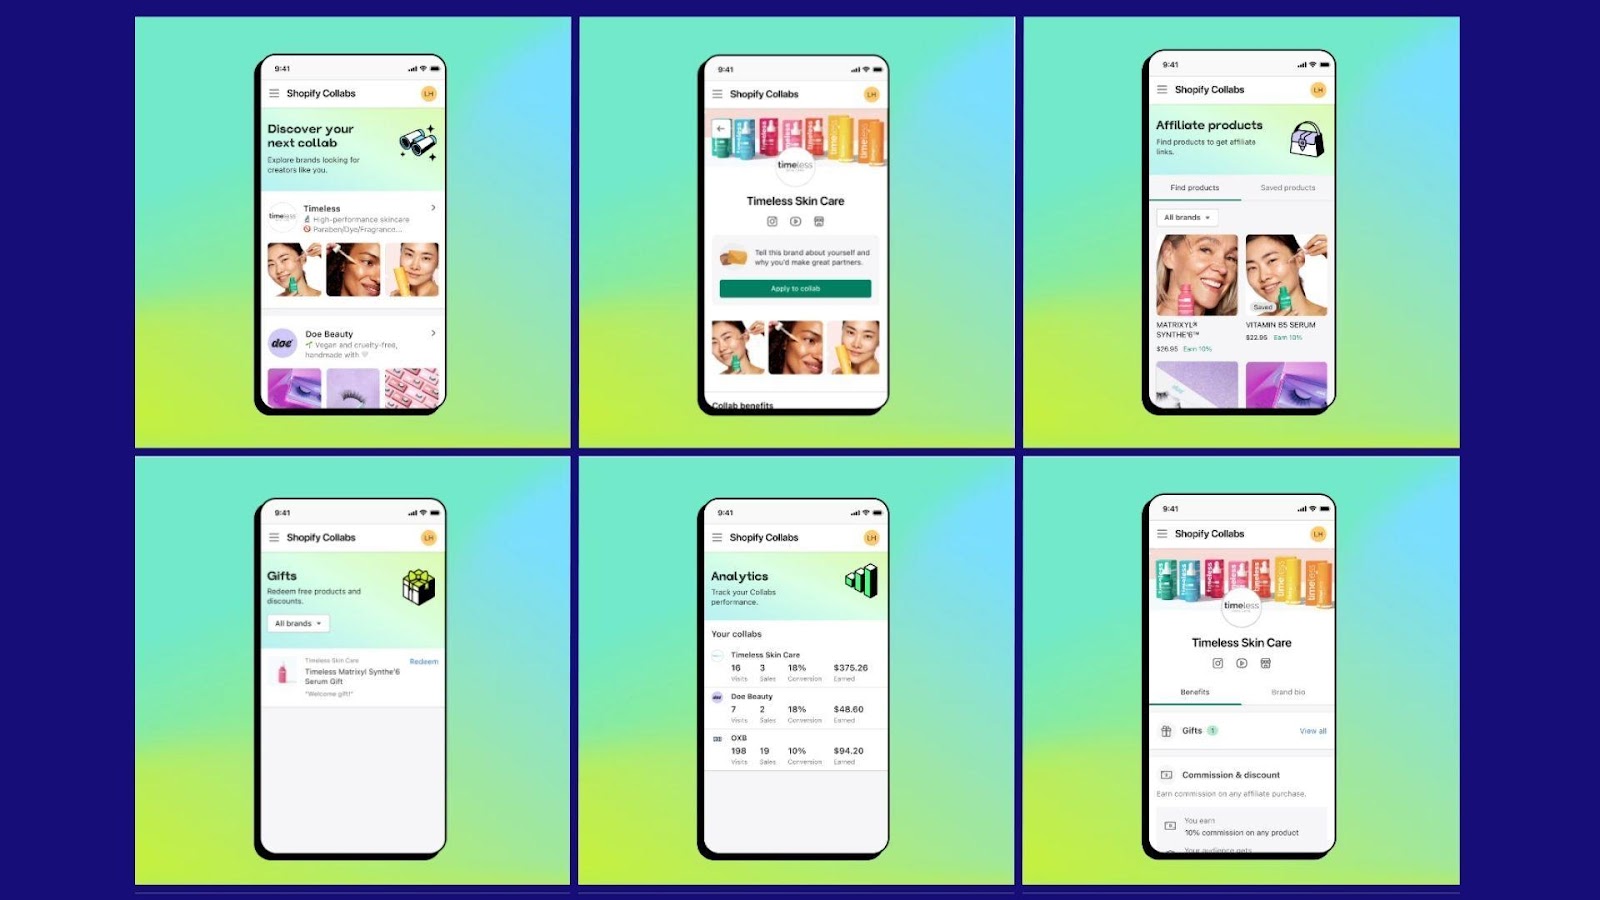 Screenshots of Shopify Collabs creator interface.